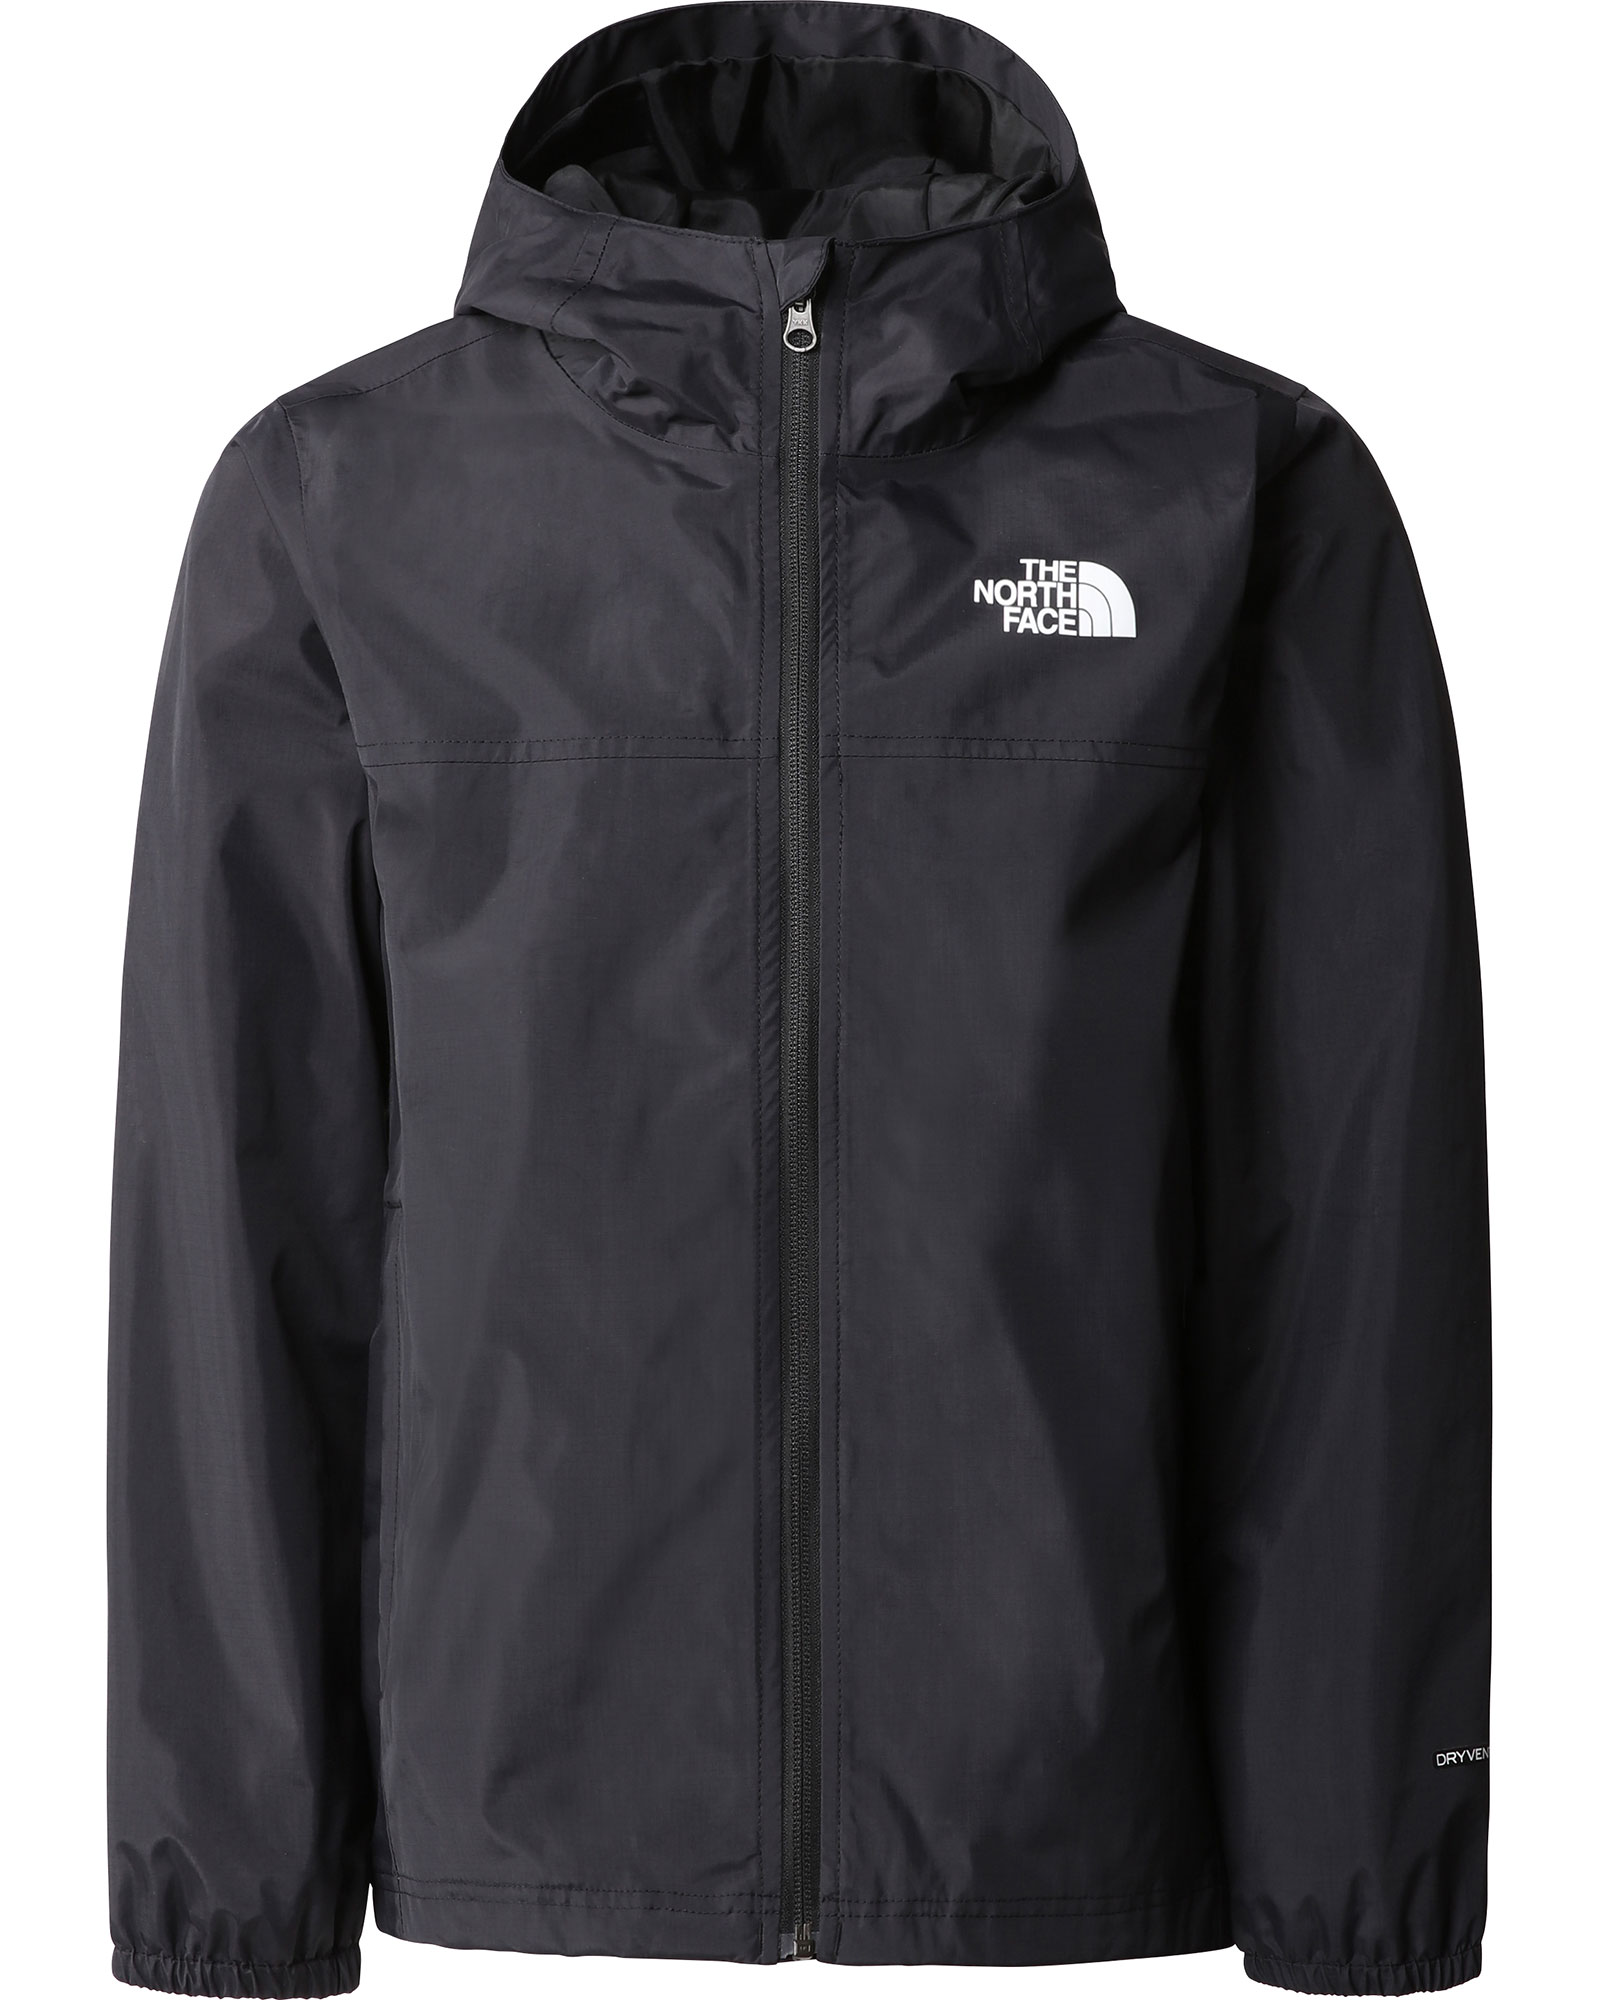 The North Face Teen Rainwear Shell Jacket